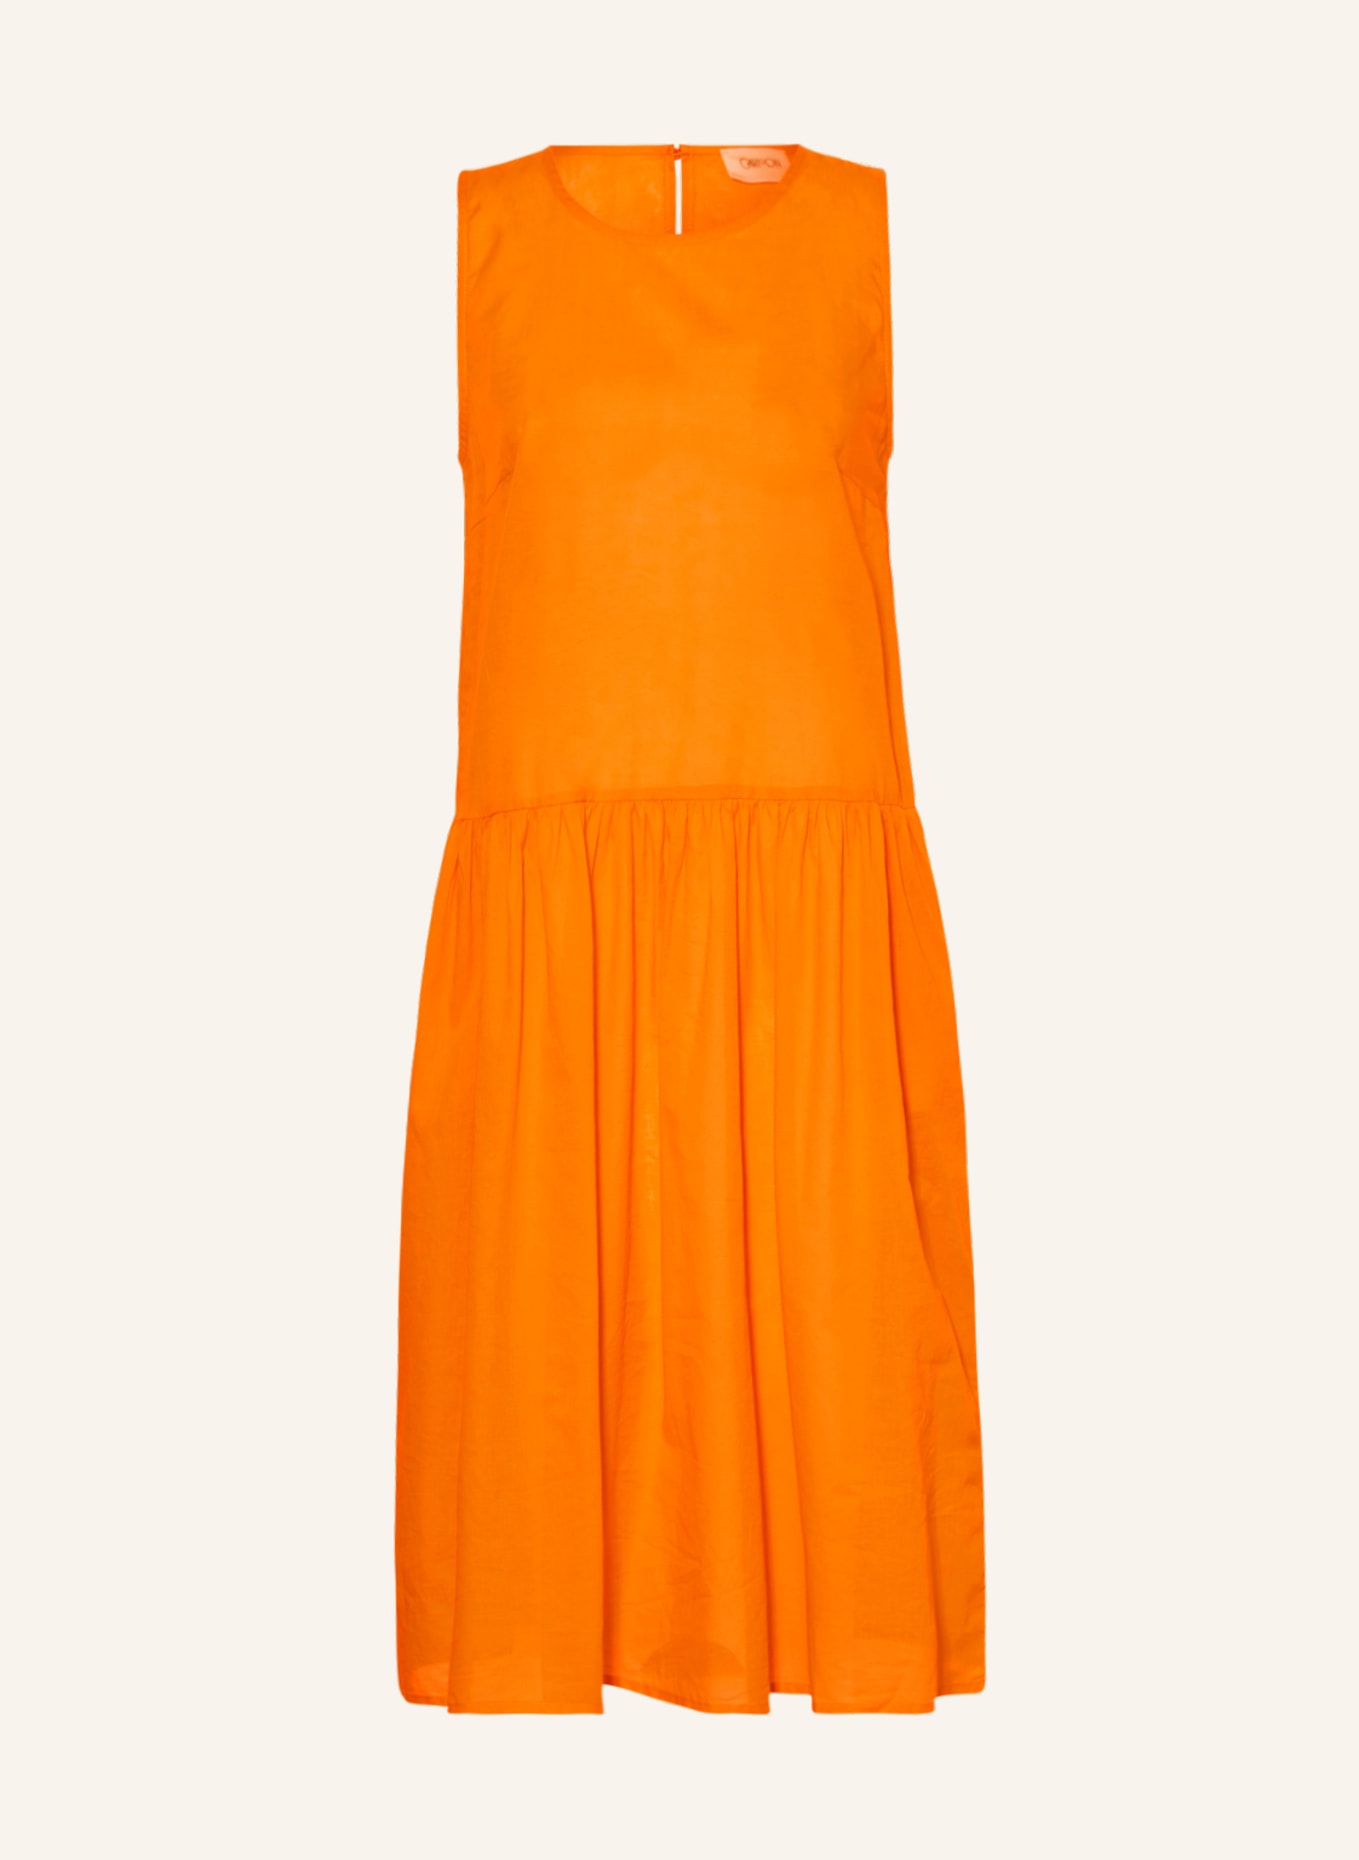 CARTOON Kleid, Farbe: ORANGE (Bild 1)